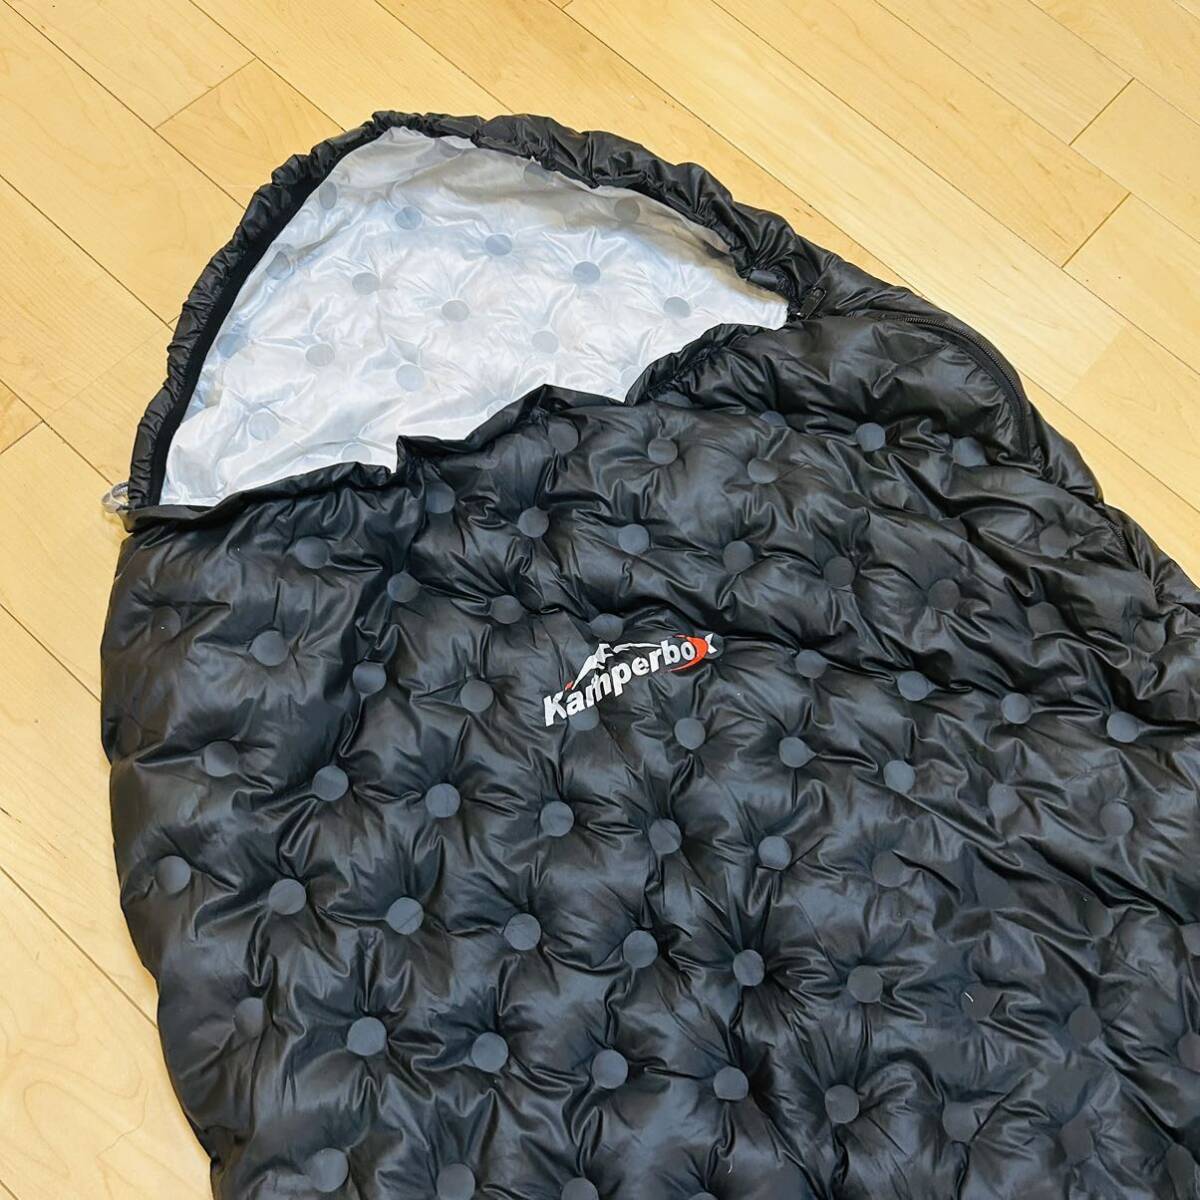 KAMPERBOX最高品質 極細500gアヒルダウン マミー型寝袋 シュラフ厚暖撥水 0-5℃ アウトドア キャンプ 野外登山 車中泊 210x75cm 910g_画像4